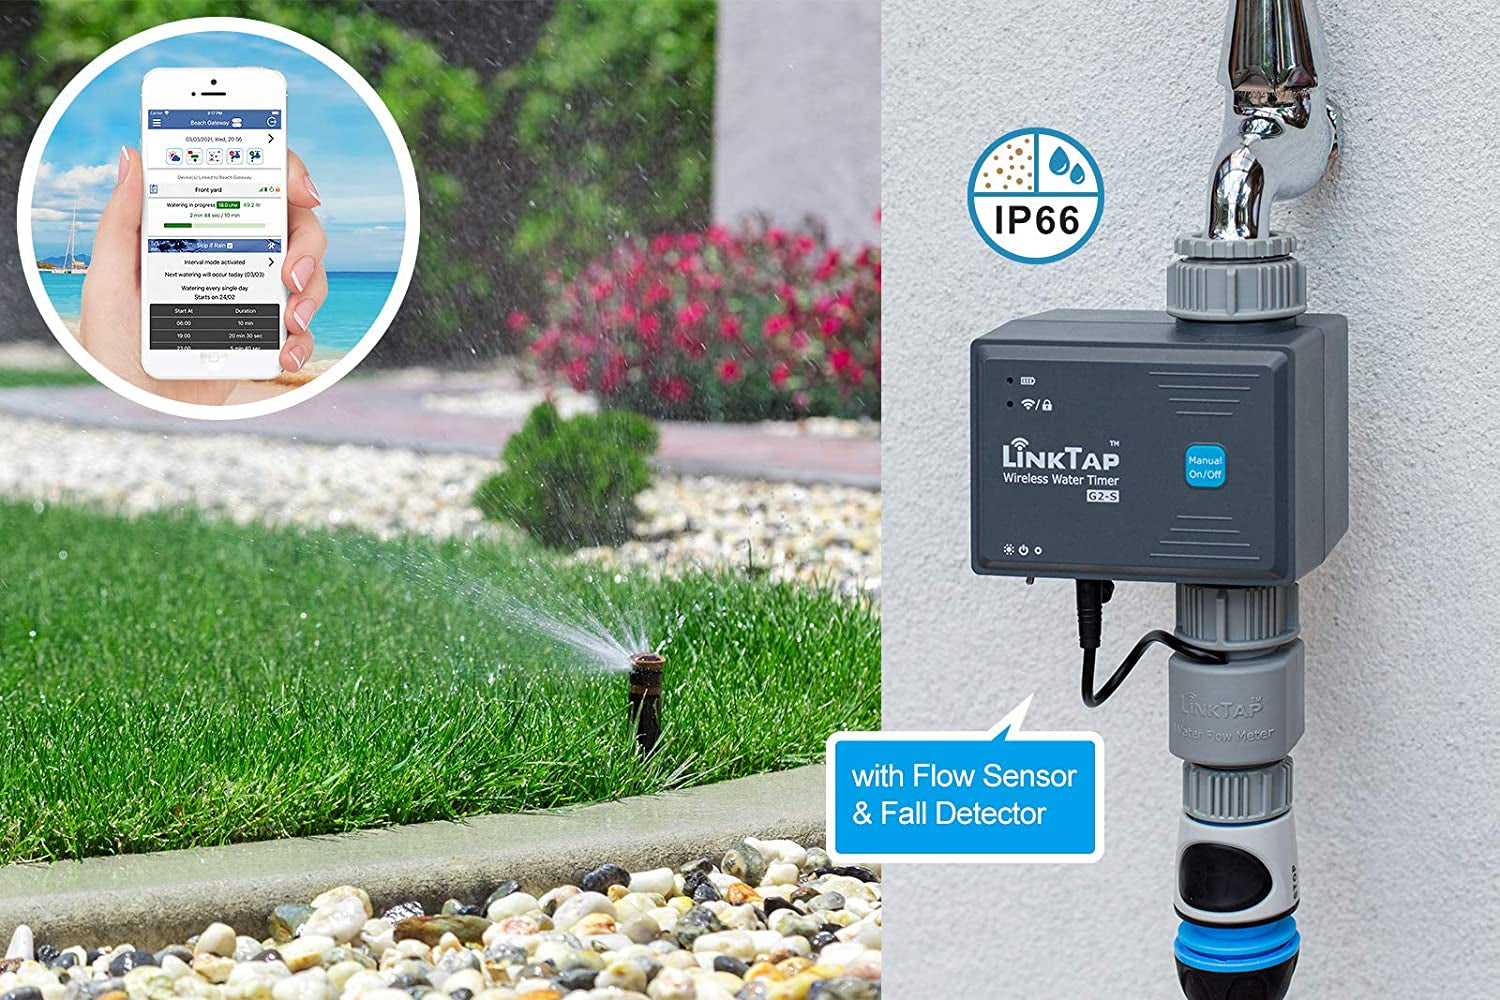 LinkTap, Linktap G2S Wireless Water Timer & Gateway & Flow Meter - Smart Sprinkler Timer for Garden, Greater Range than Wifi Hose Timer, Real-Time Fault Detection & Notification, Automatic Rain Skip, IP66